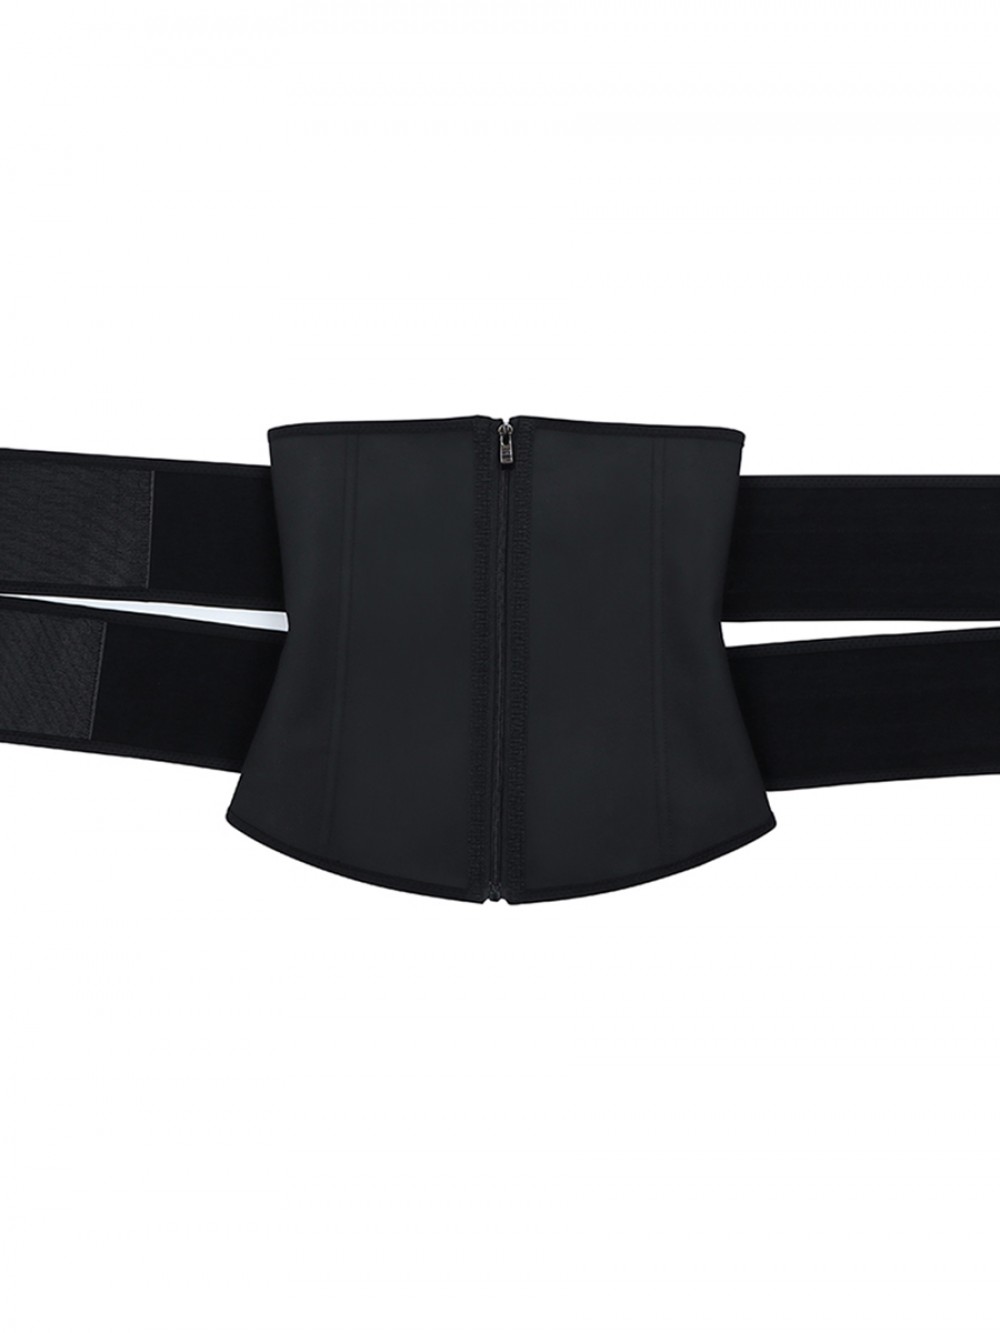 Black 7 Steel Bones Waist Cincher Double Belts Removable Shape